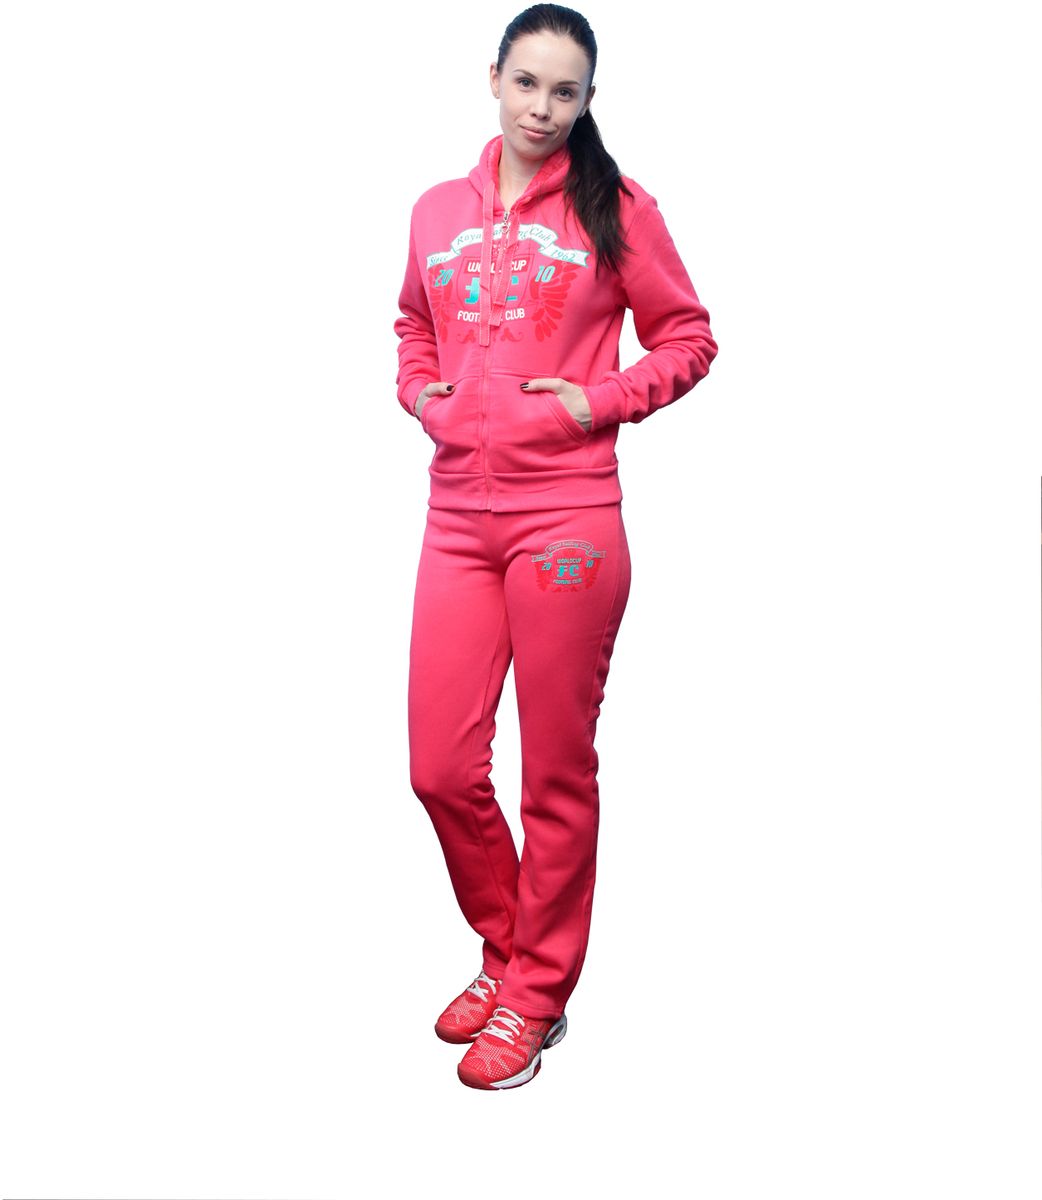 Летний спортивный костюм на озон. Прогулочный спортивный костюм женский. Розовый спортивный костюм женский. Спортивный костюм женский для прогулок. Спортивный костюм синтетика женский.